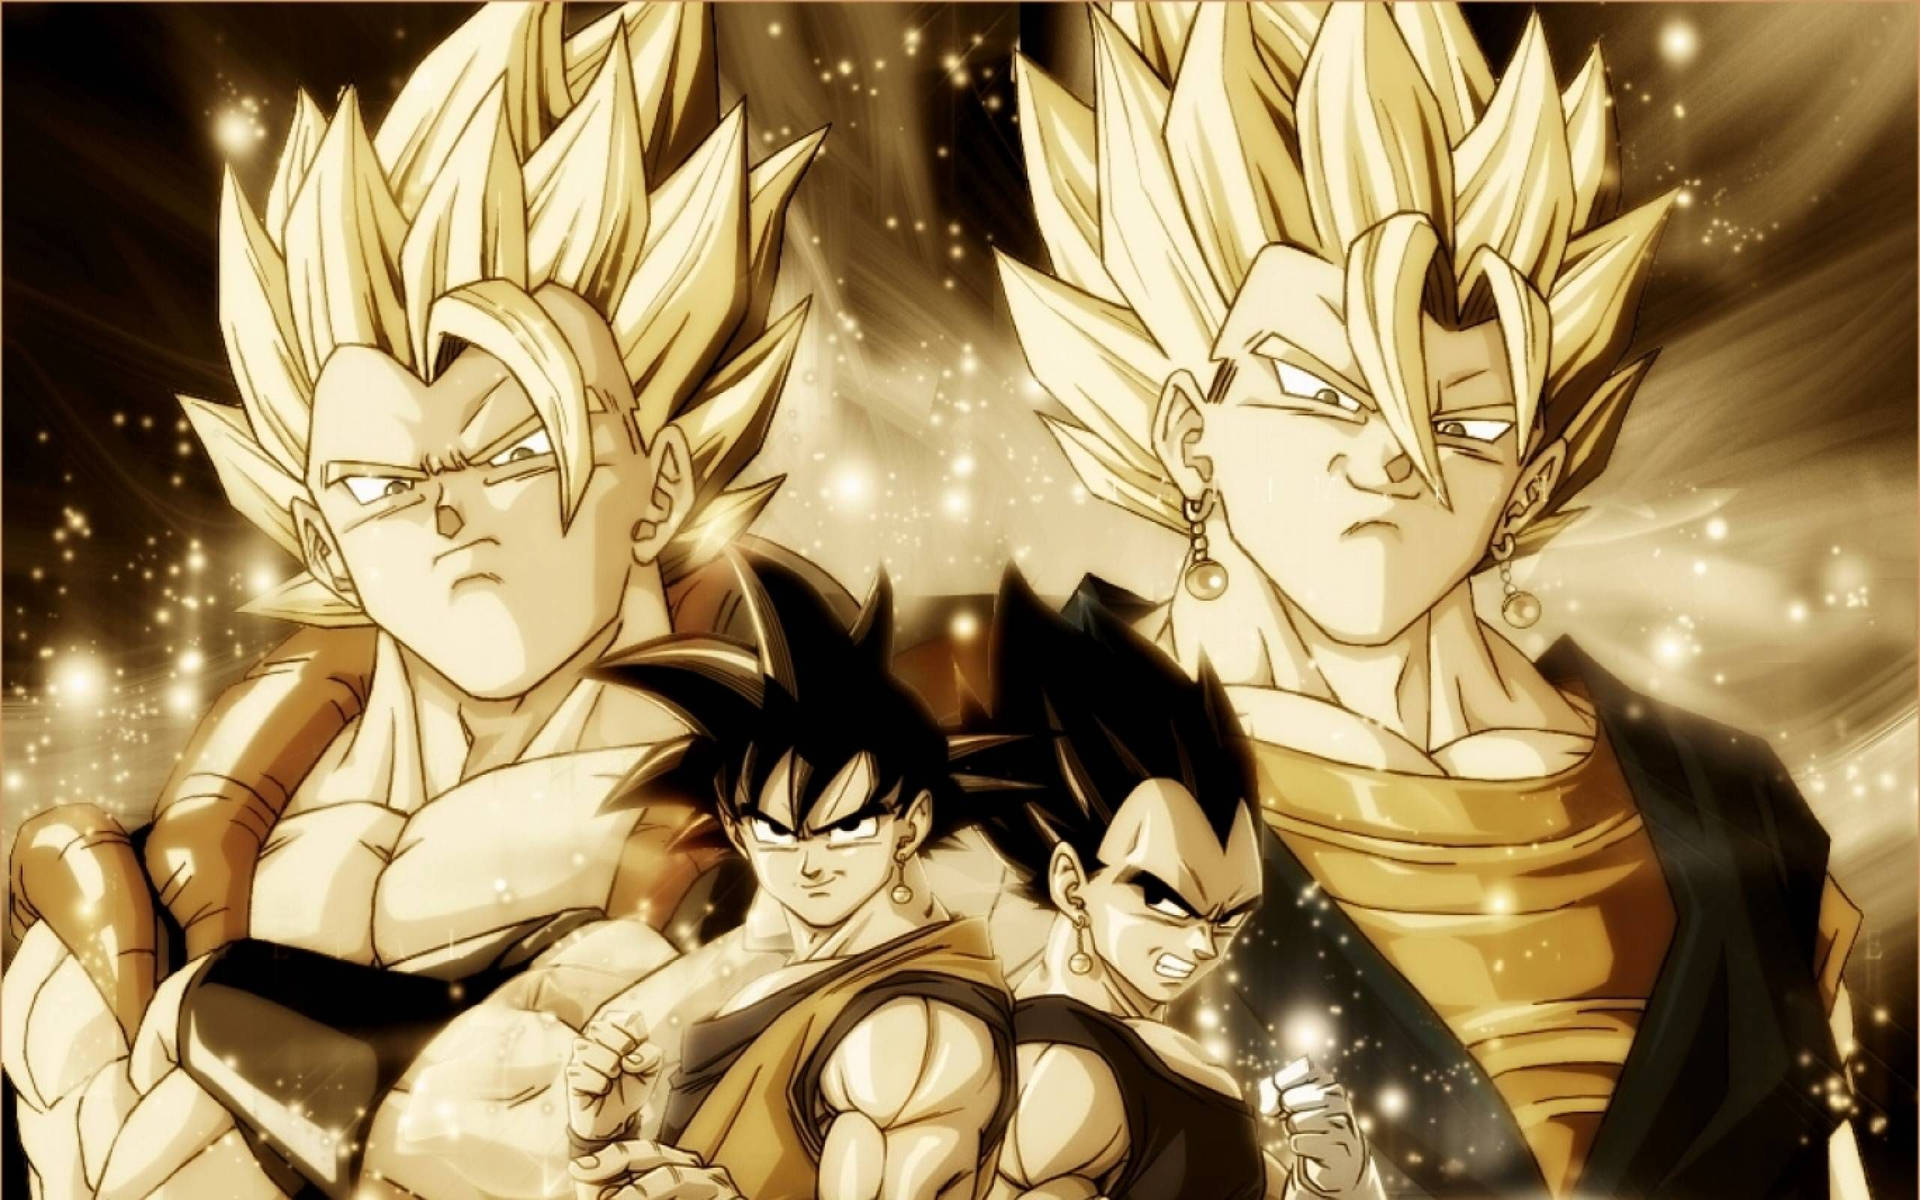 Goku and Vegeta in Classic Super Saiyan Mode Wallpaper